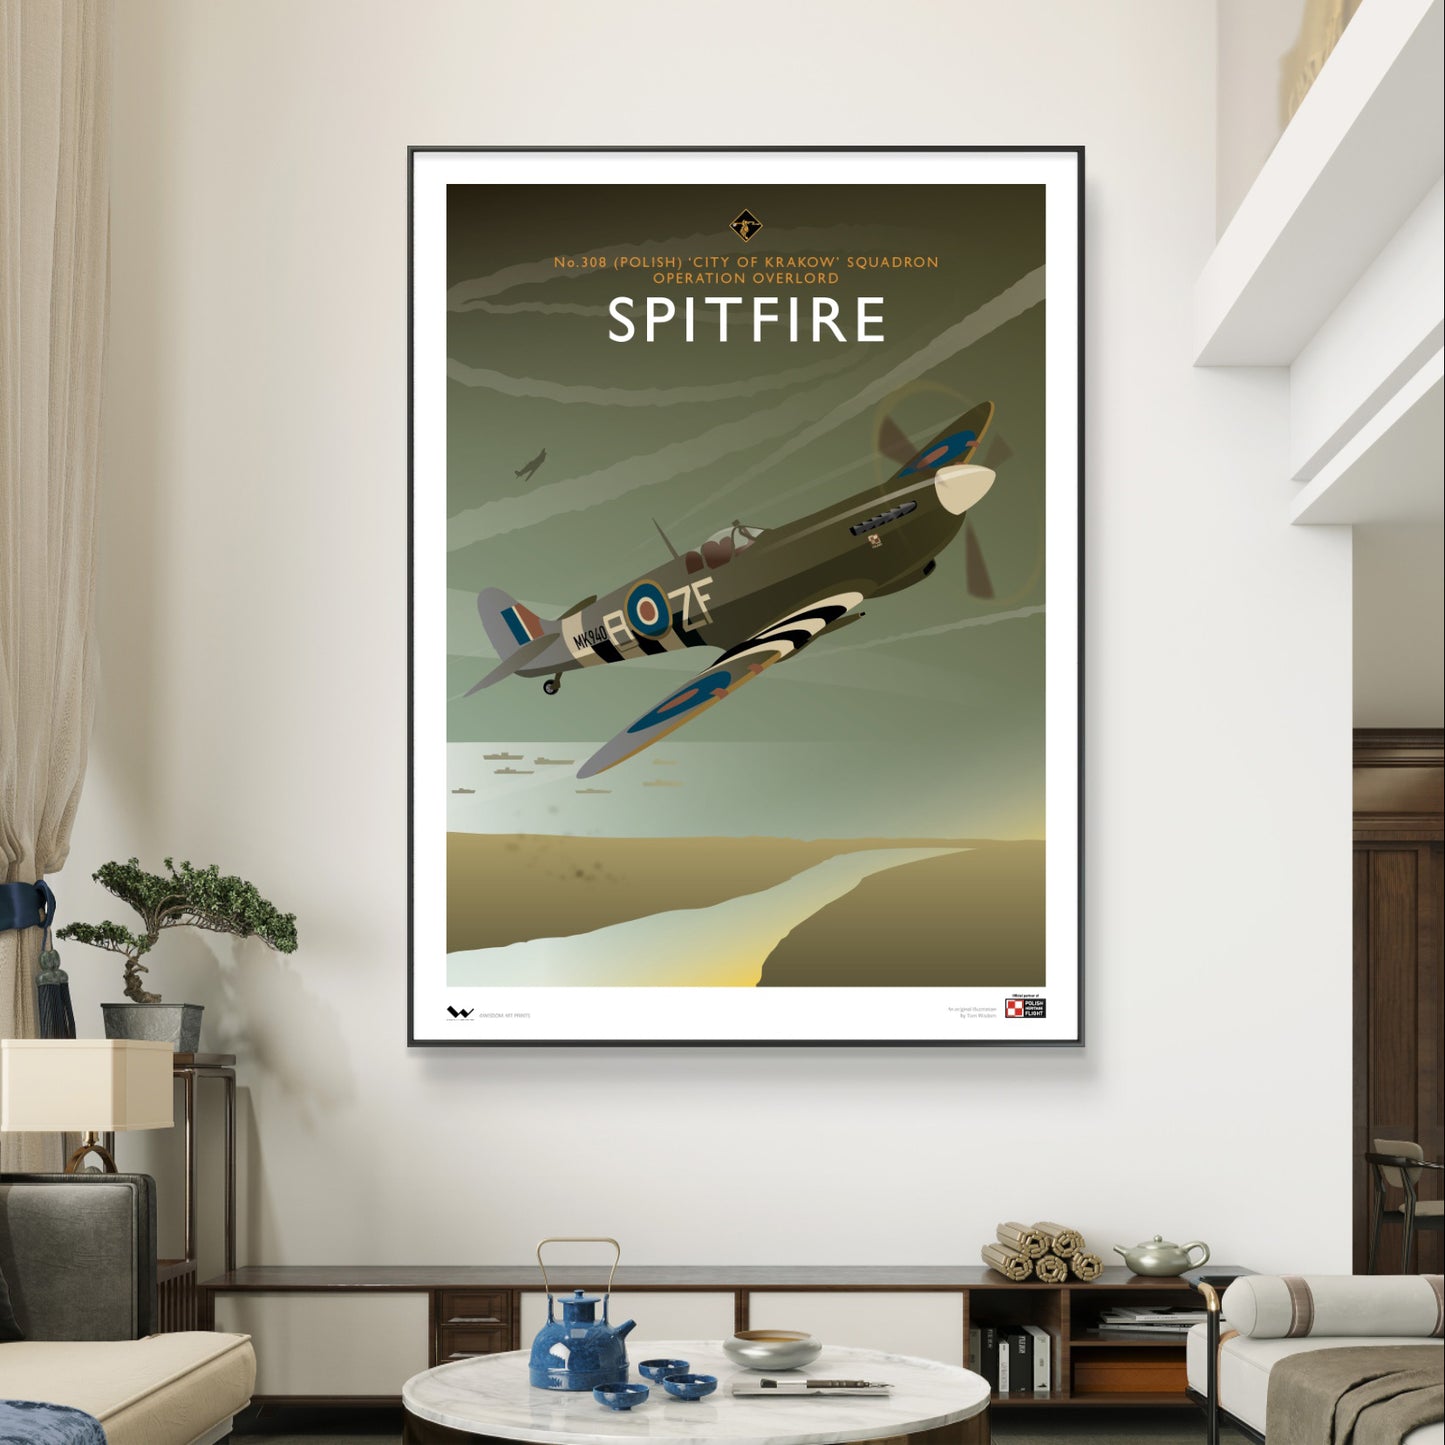 Spitfire (No. 308 Squadron RAF) Limited Edition